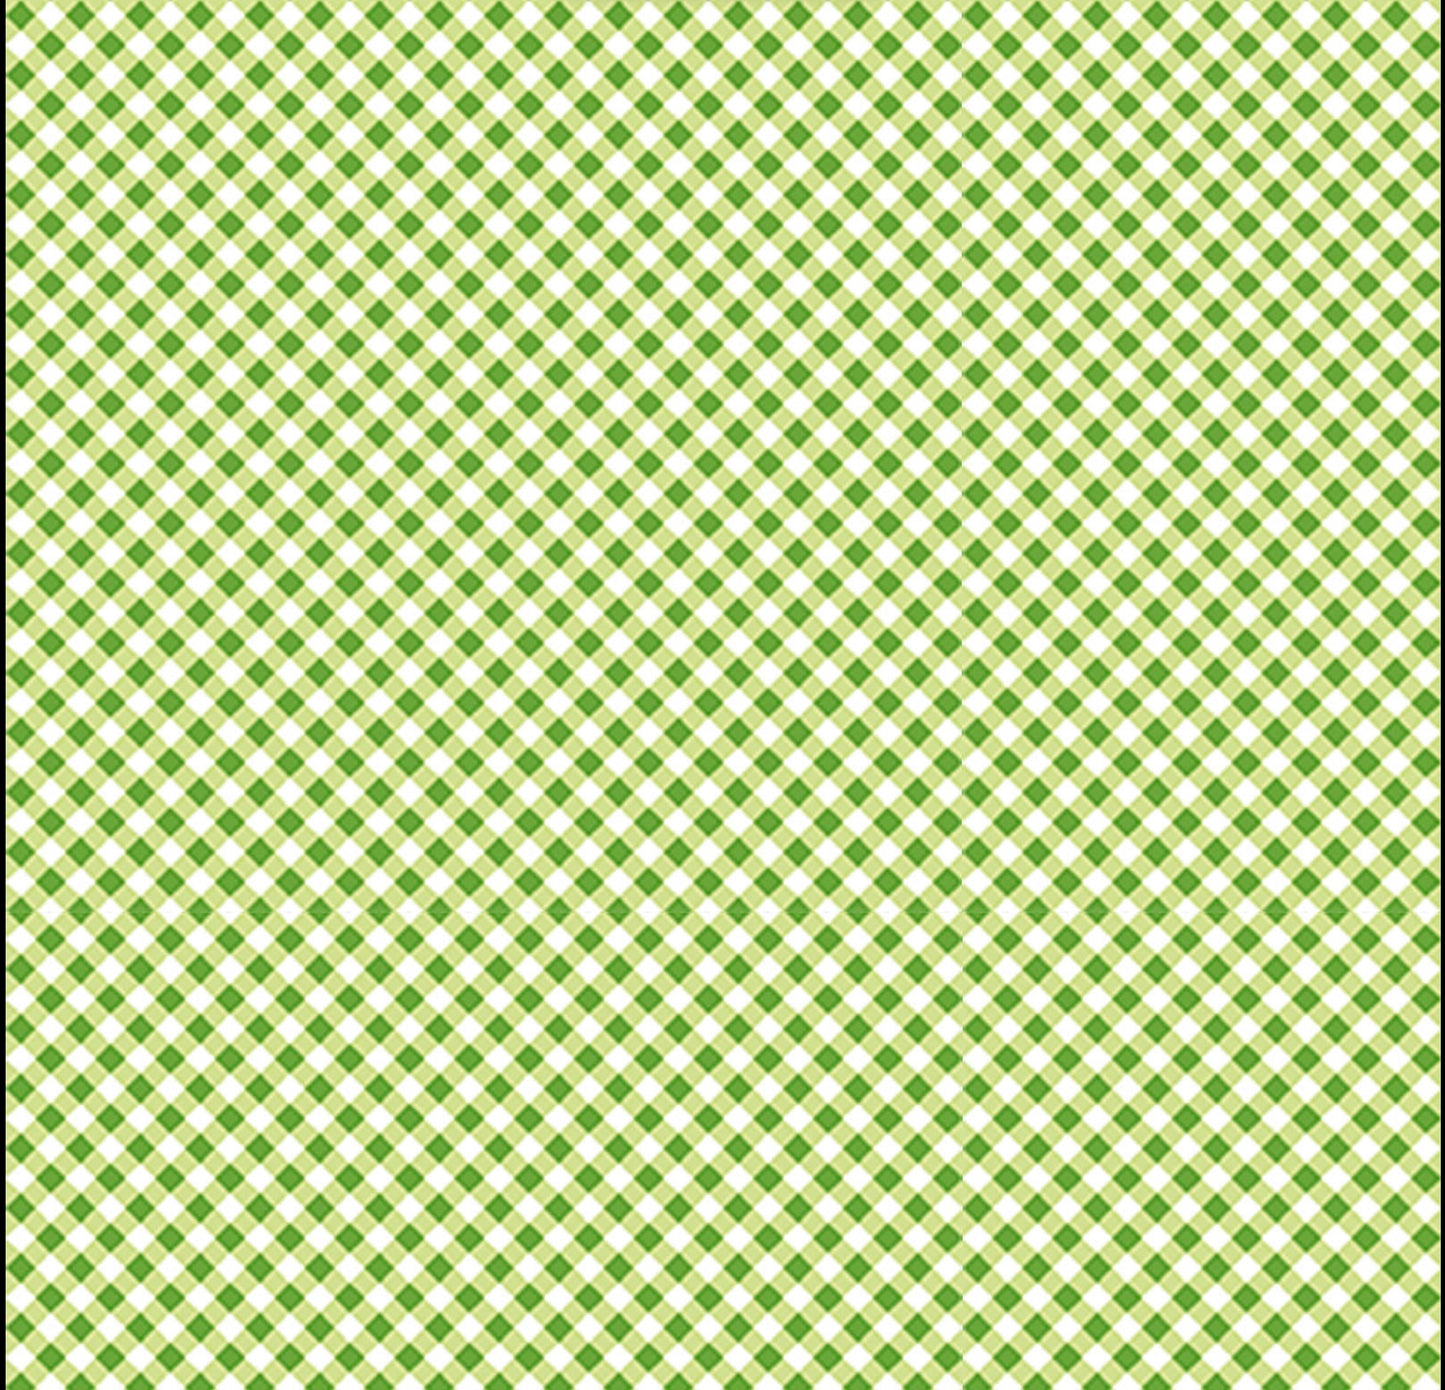 LEAP FROG - Diagonal Gingham Olive - by Anita Jarem, 100% Cotton, Toad Hollow Fabrics